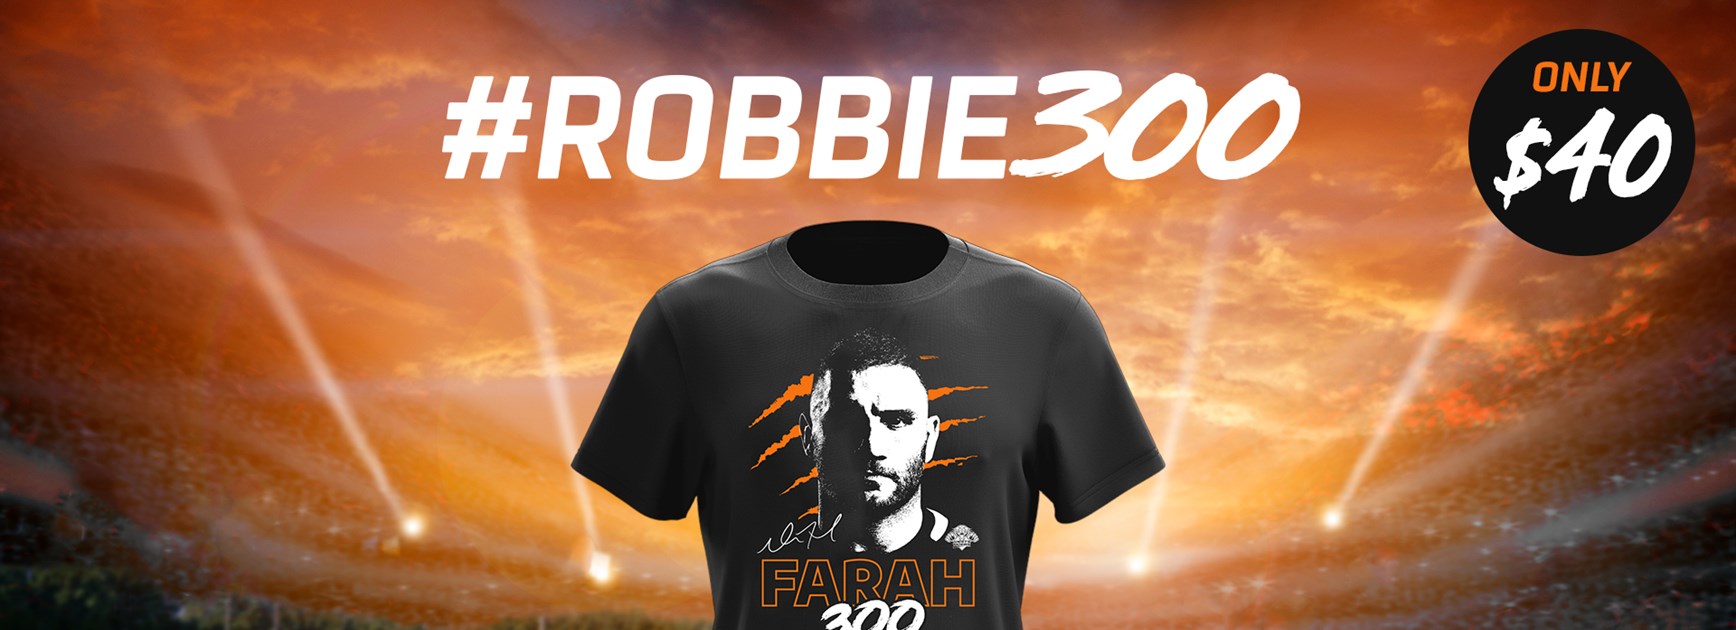 Get your #Robbie300 shirt!